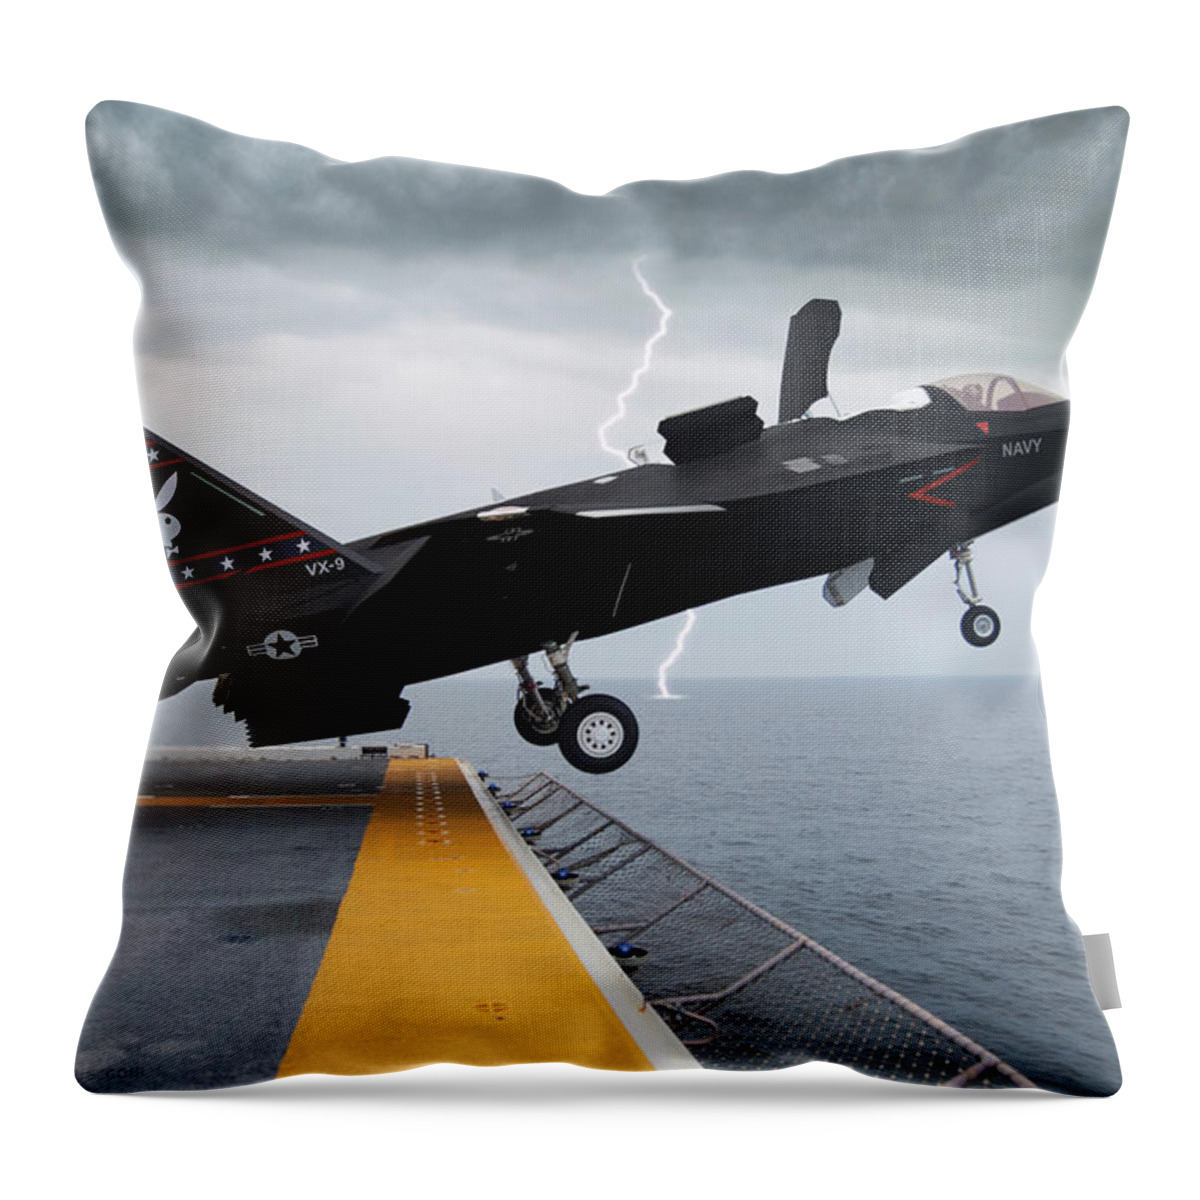 Stealth Throw Pillow featuring the digital art Vx-9 F-35b by Custom Aviation Art